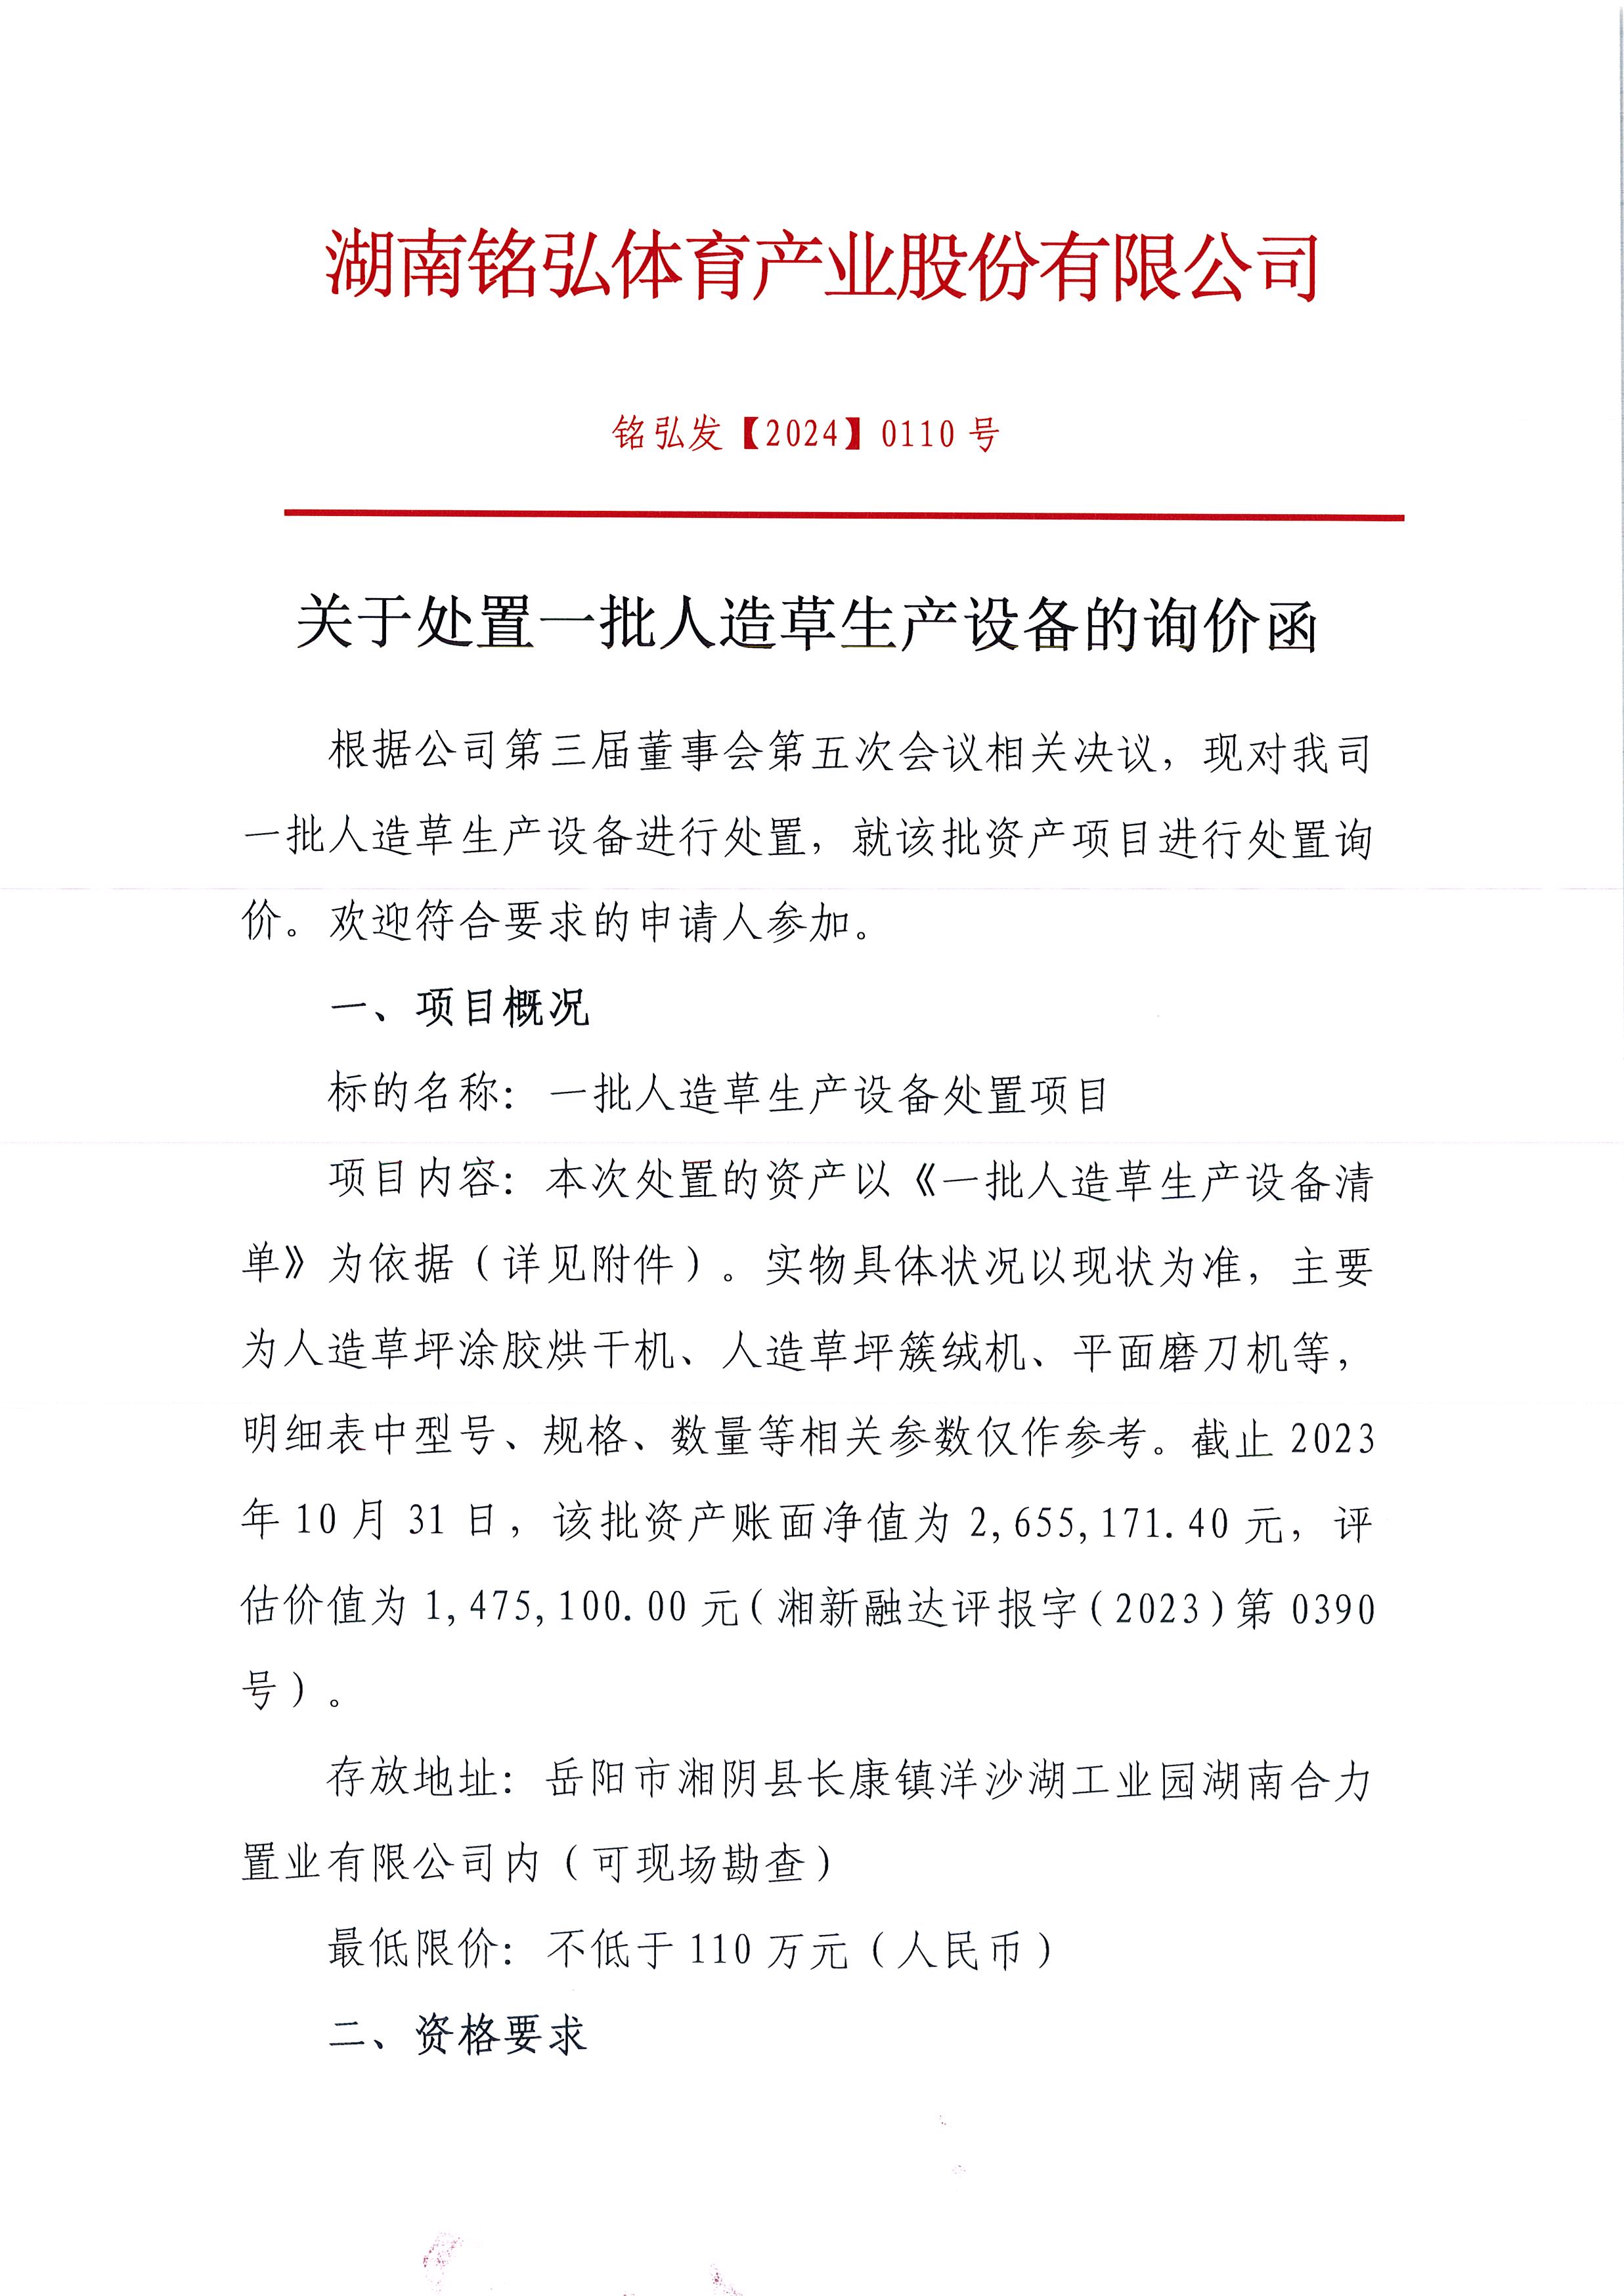 aoa体育(中国)股份有限公司关于处置一批人造草生产设备的询价函1